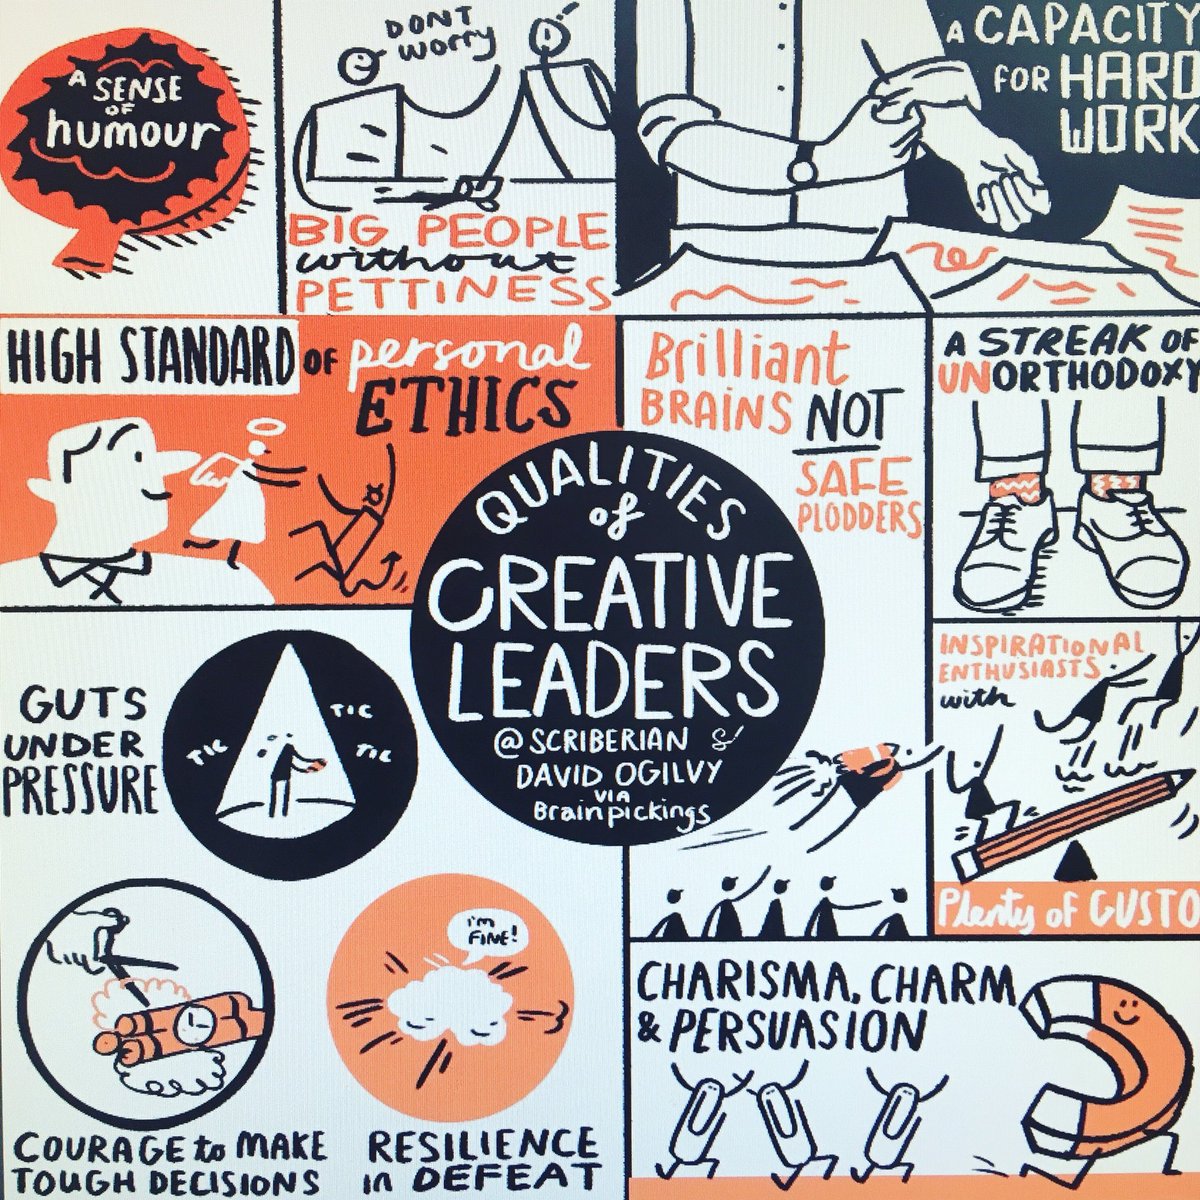 Nice visual on #creativeleaders by @scriberian and #DavidOgilvy :)